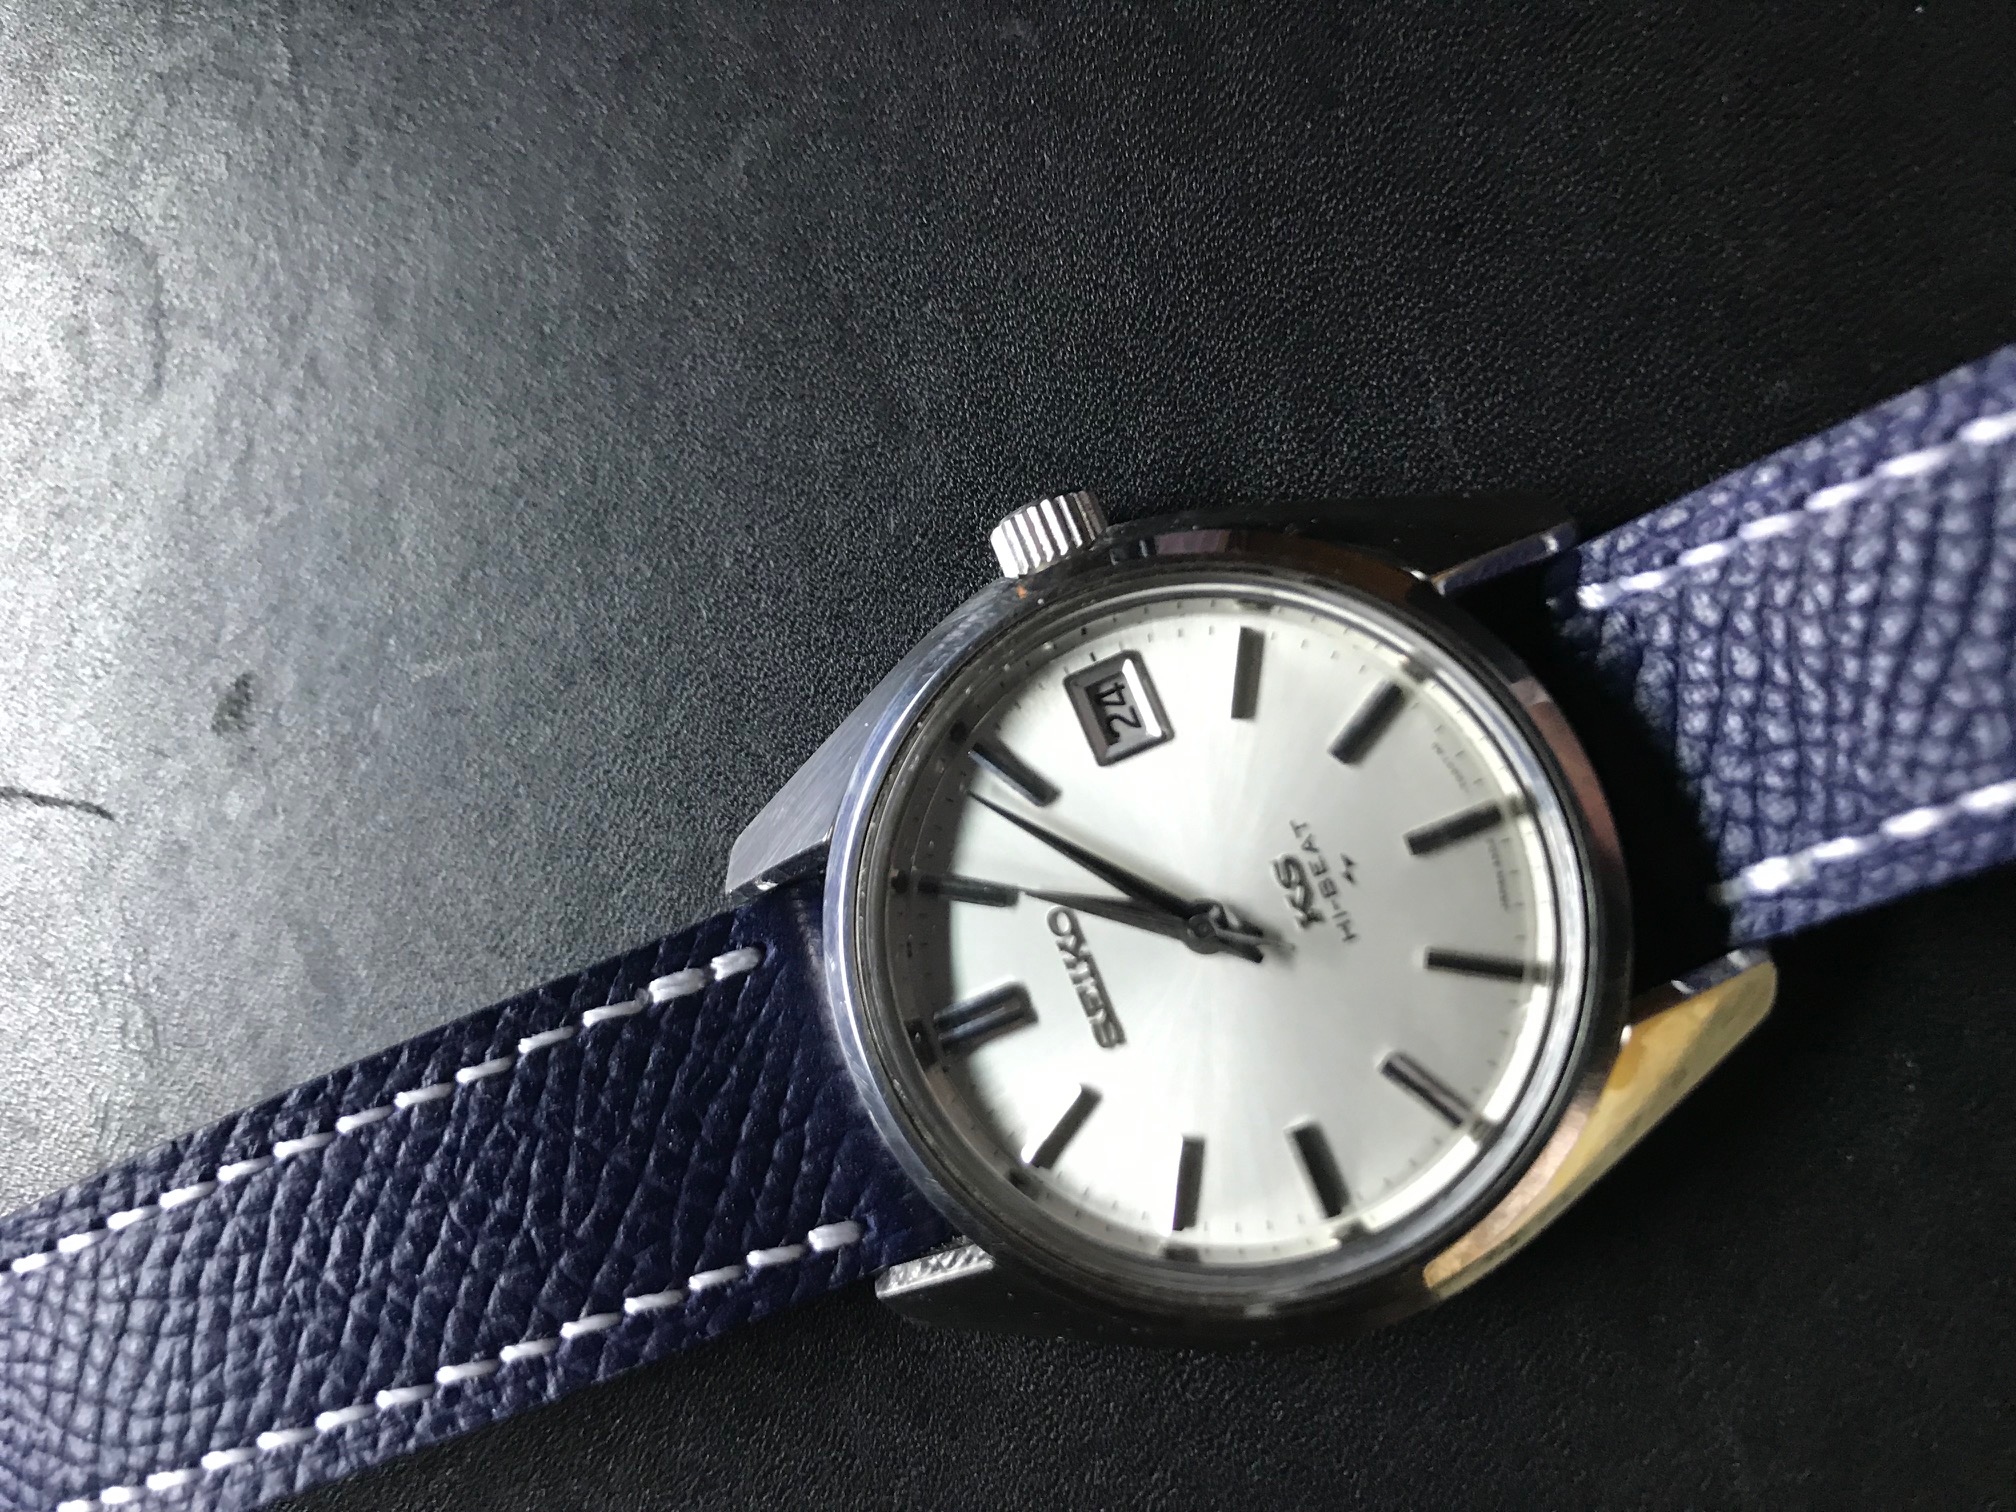 King Seiko 4502A-7001 - Awesome Watch!!! | WatchCharts